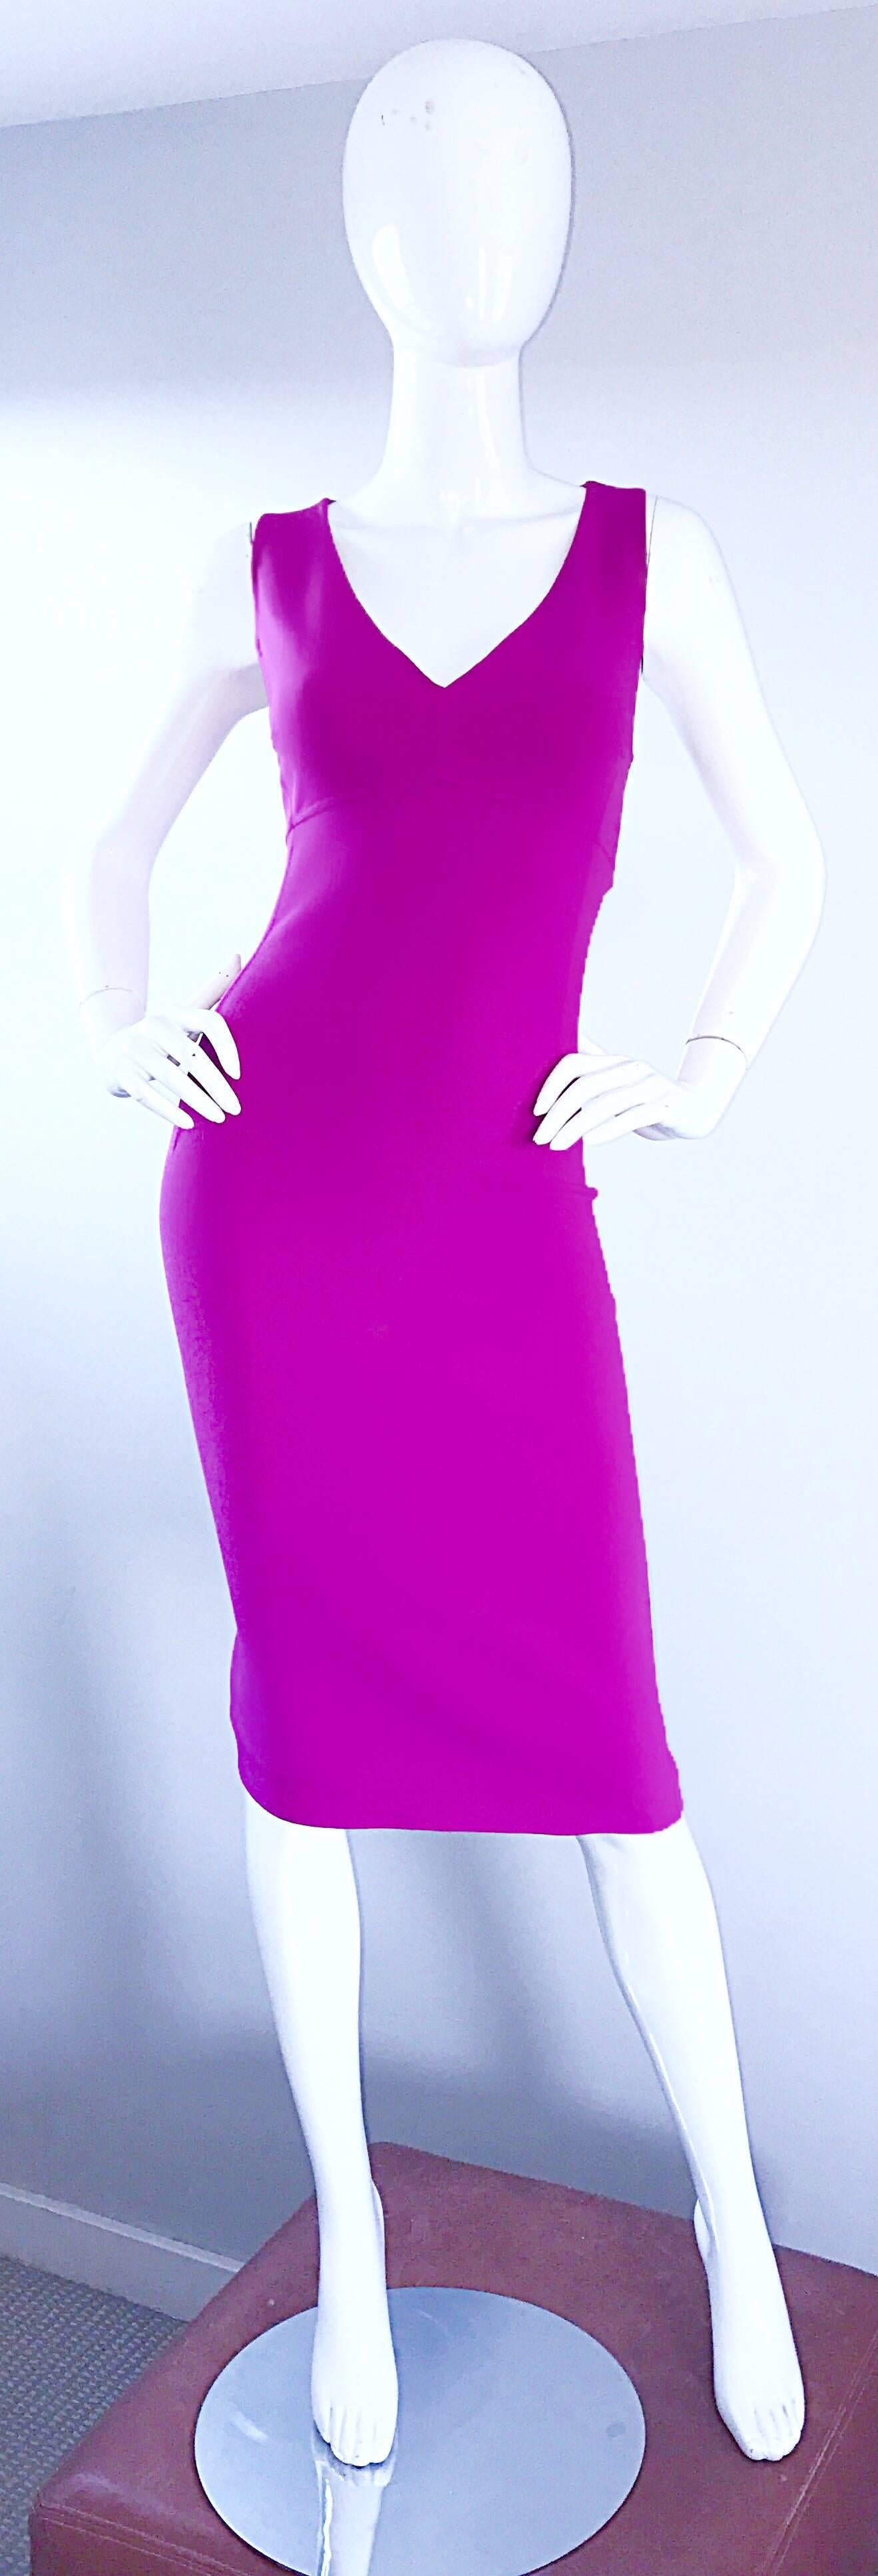 Women's Michael Kors Collection Fuchsia Hot Pink Double Face Wool Runway Dress, Size 10 